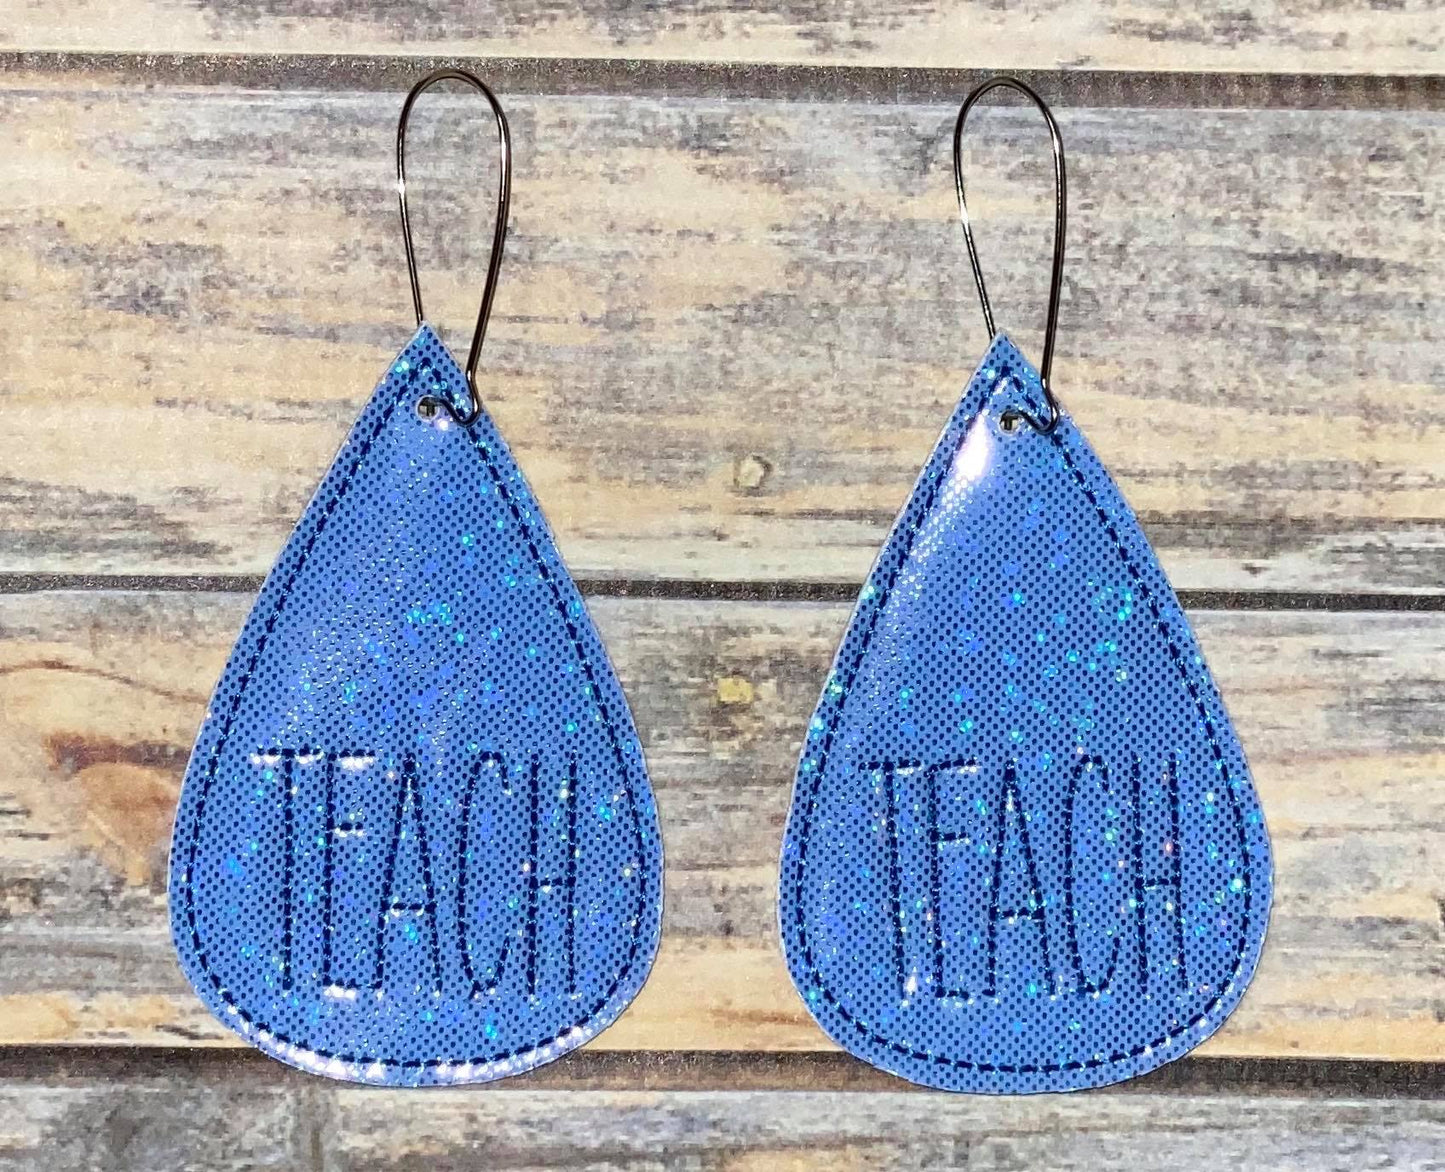 Teach Tear Drop Earrings - 3 sizes - Digital Embroidery Design